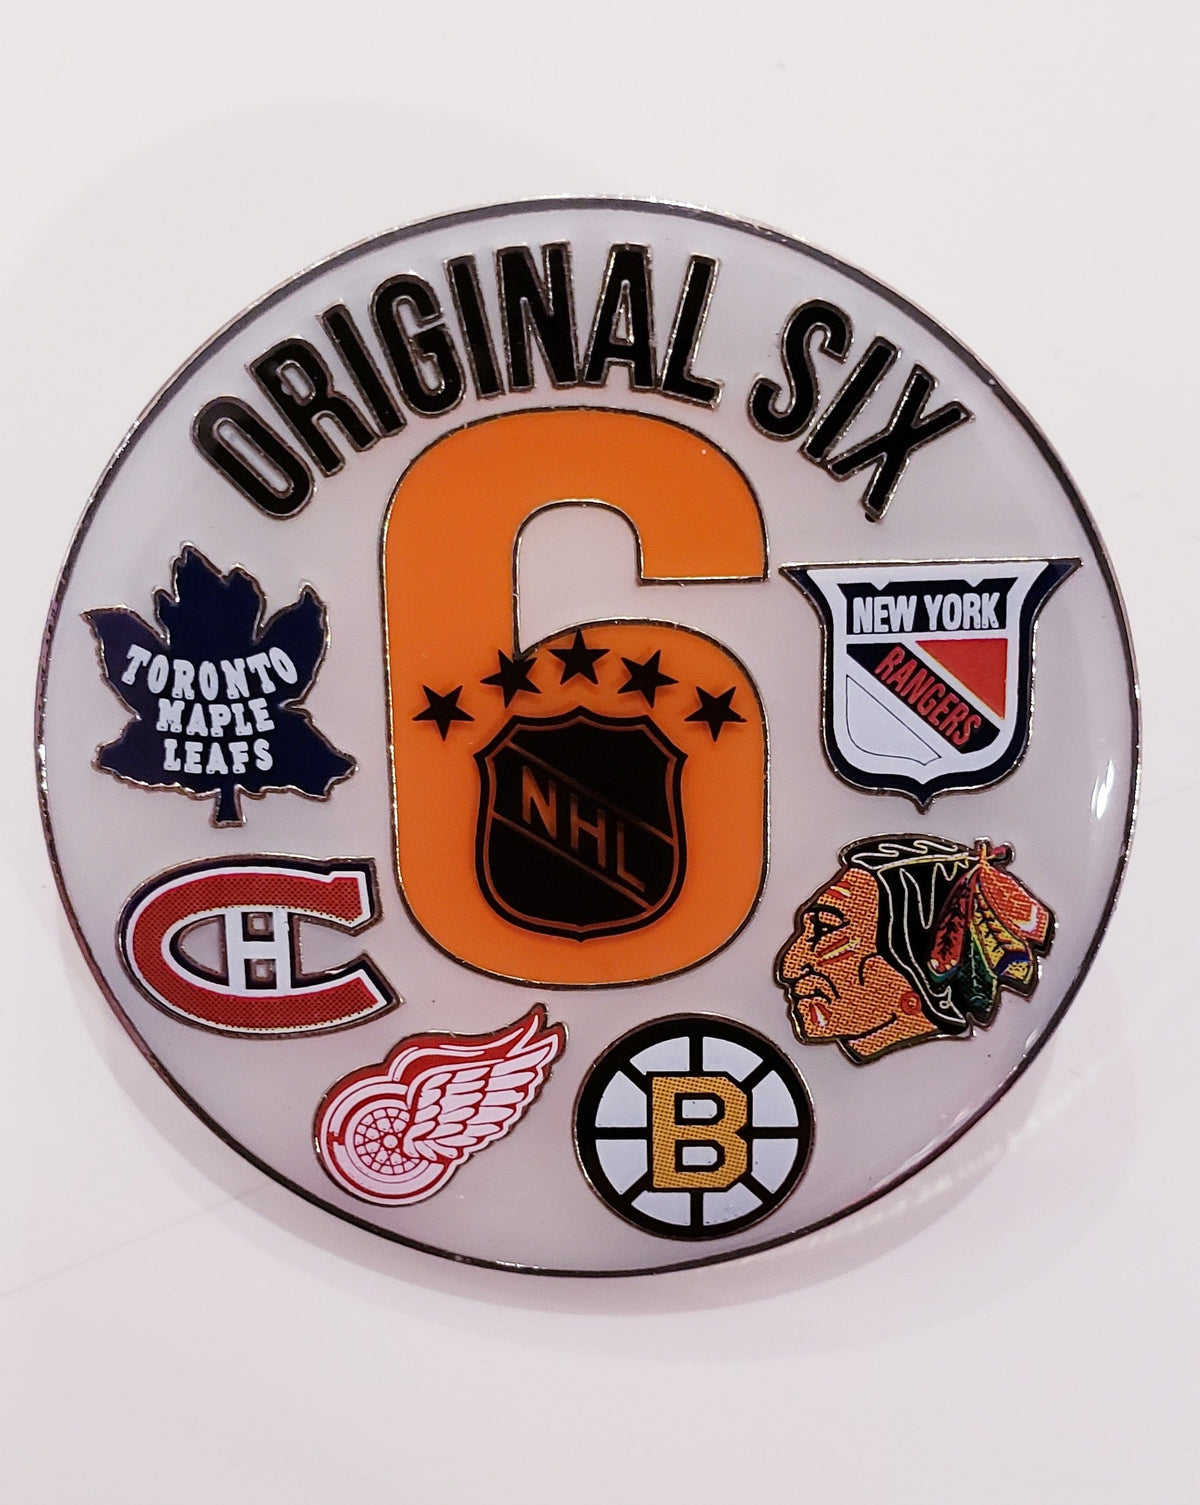 Pin on Hockey, NHL, Canadian.